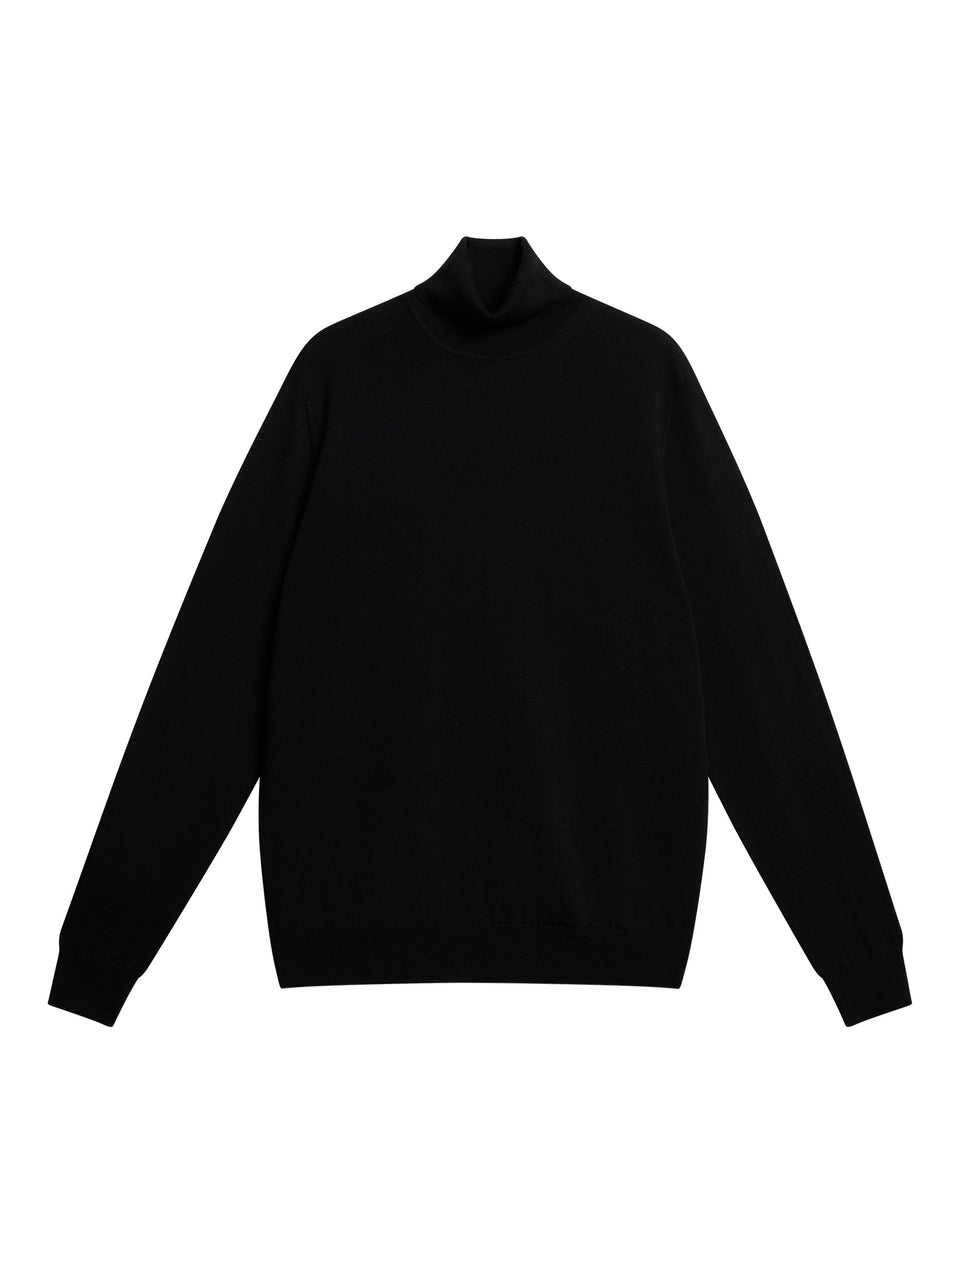 Lyd Merino Turtleneck Sweater / Black